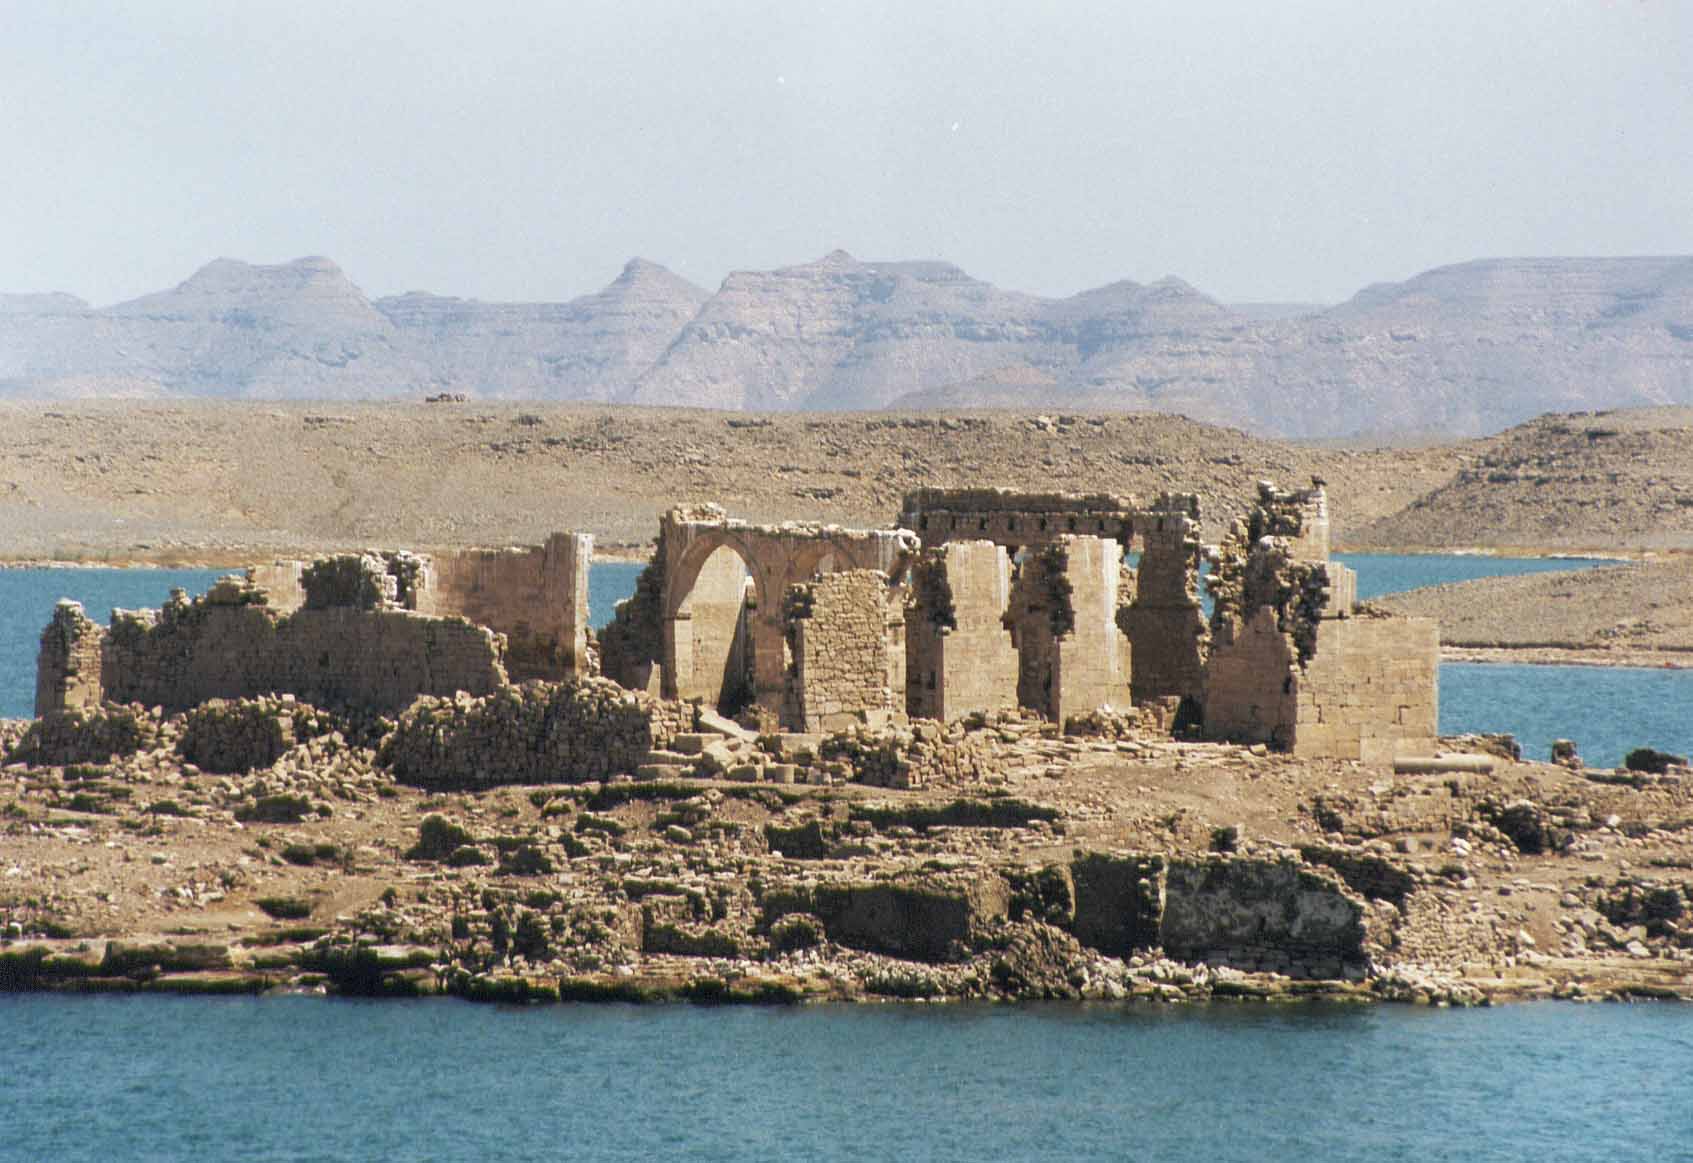 Citadel of Kasr Ibrim